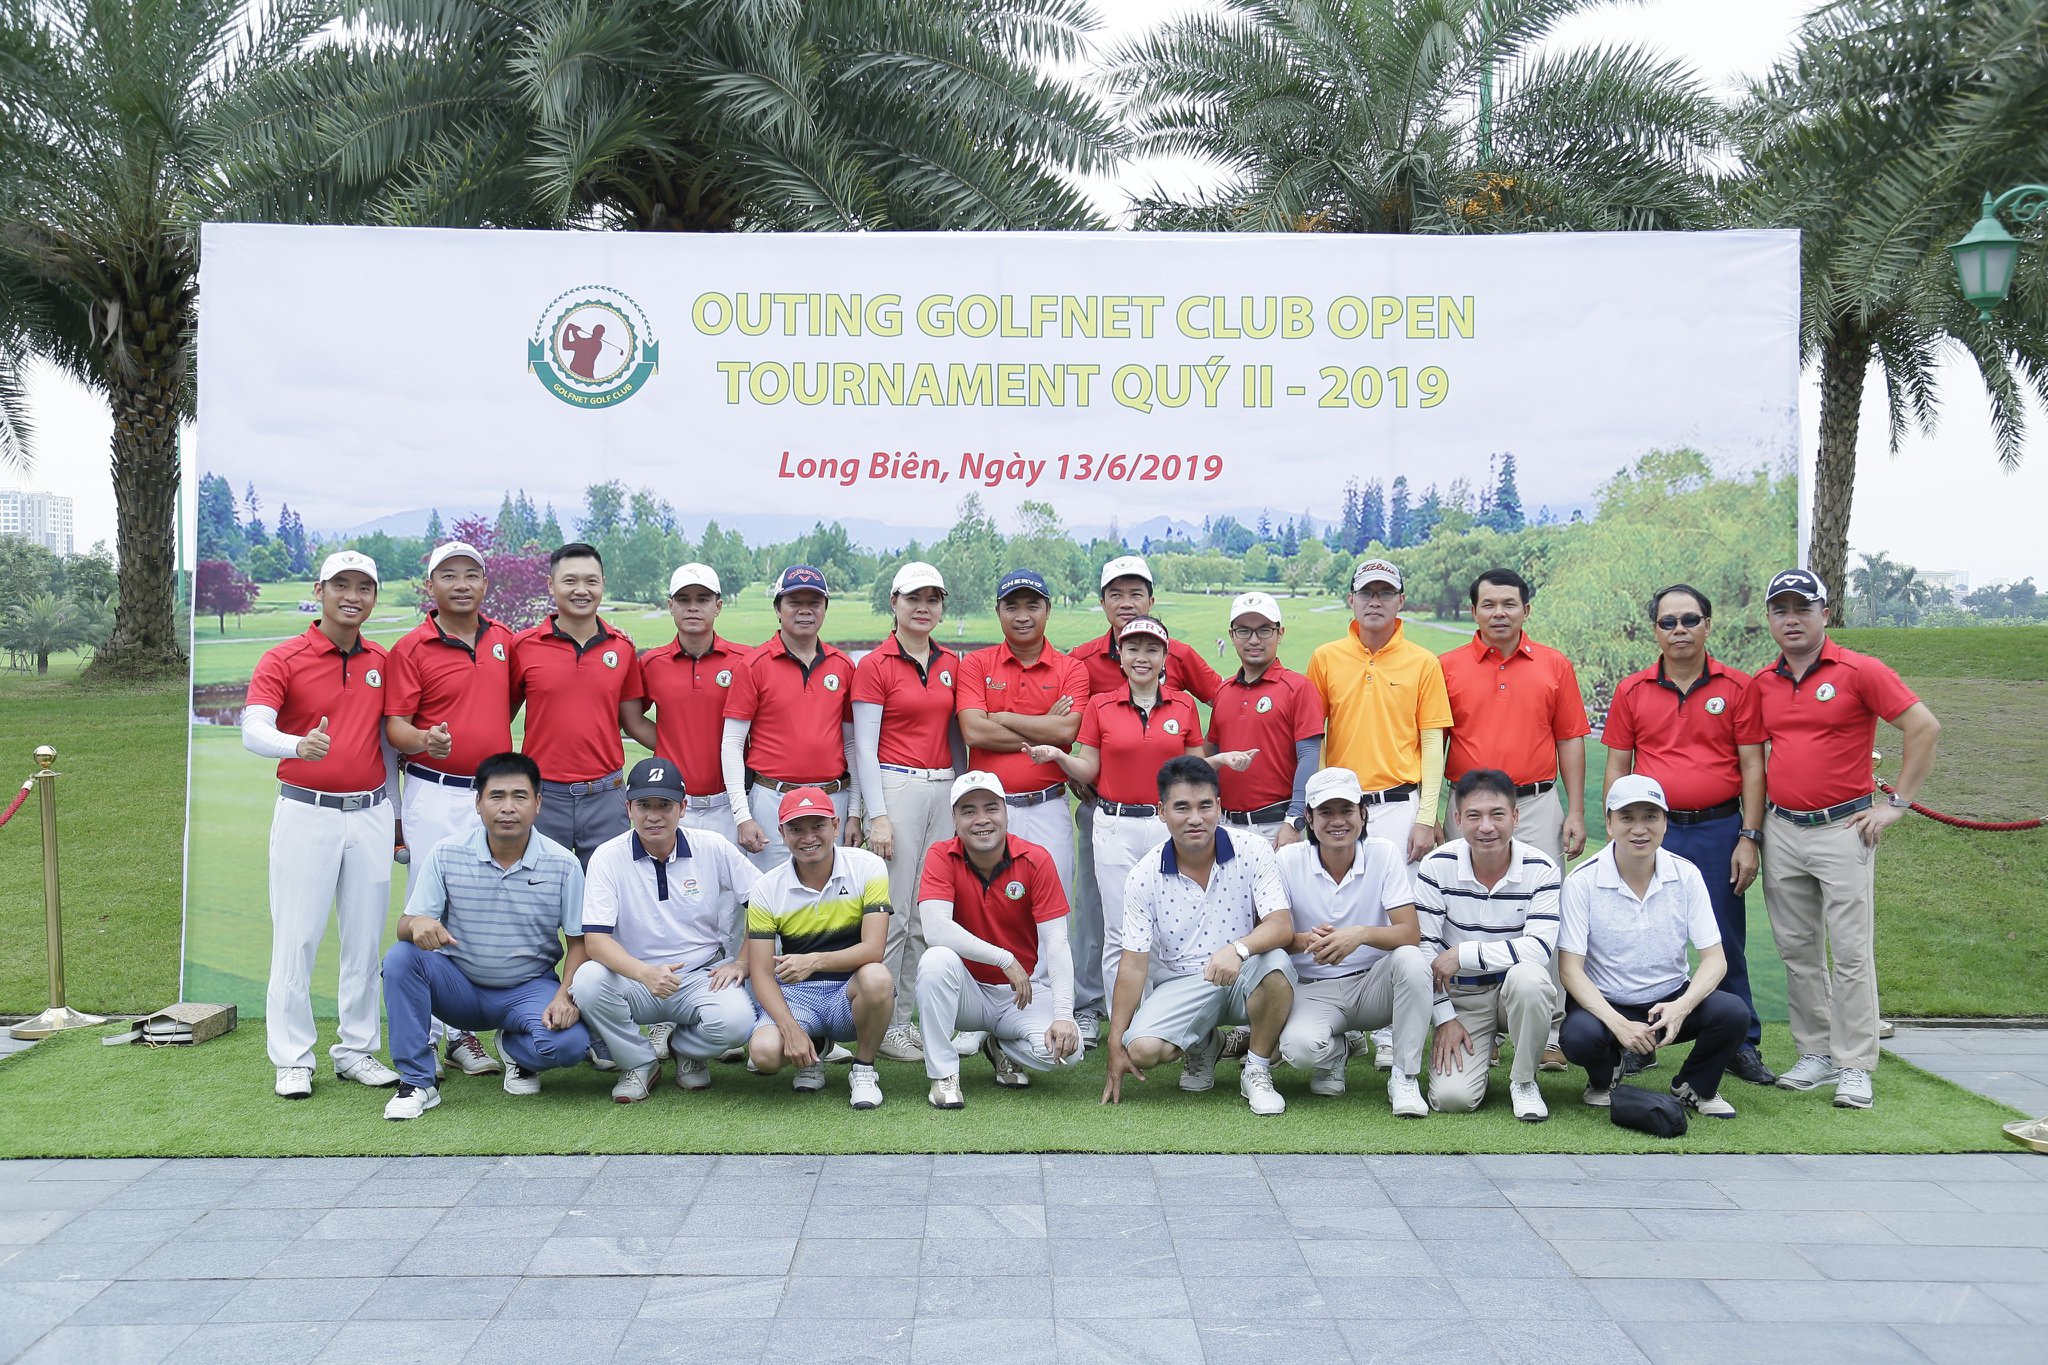 Outing Golfnet Club Open Tournament quý II – 2019